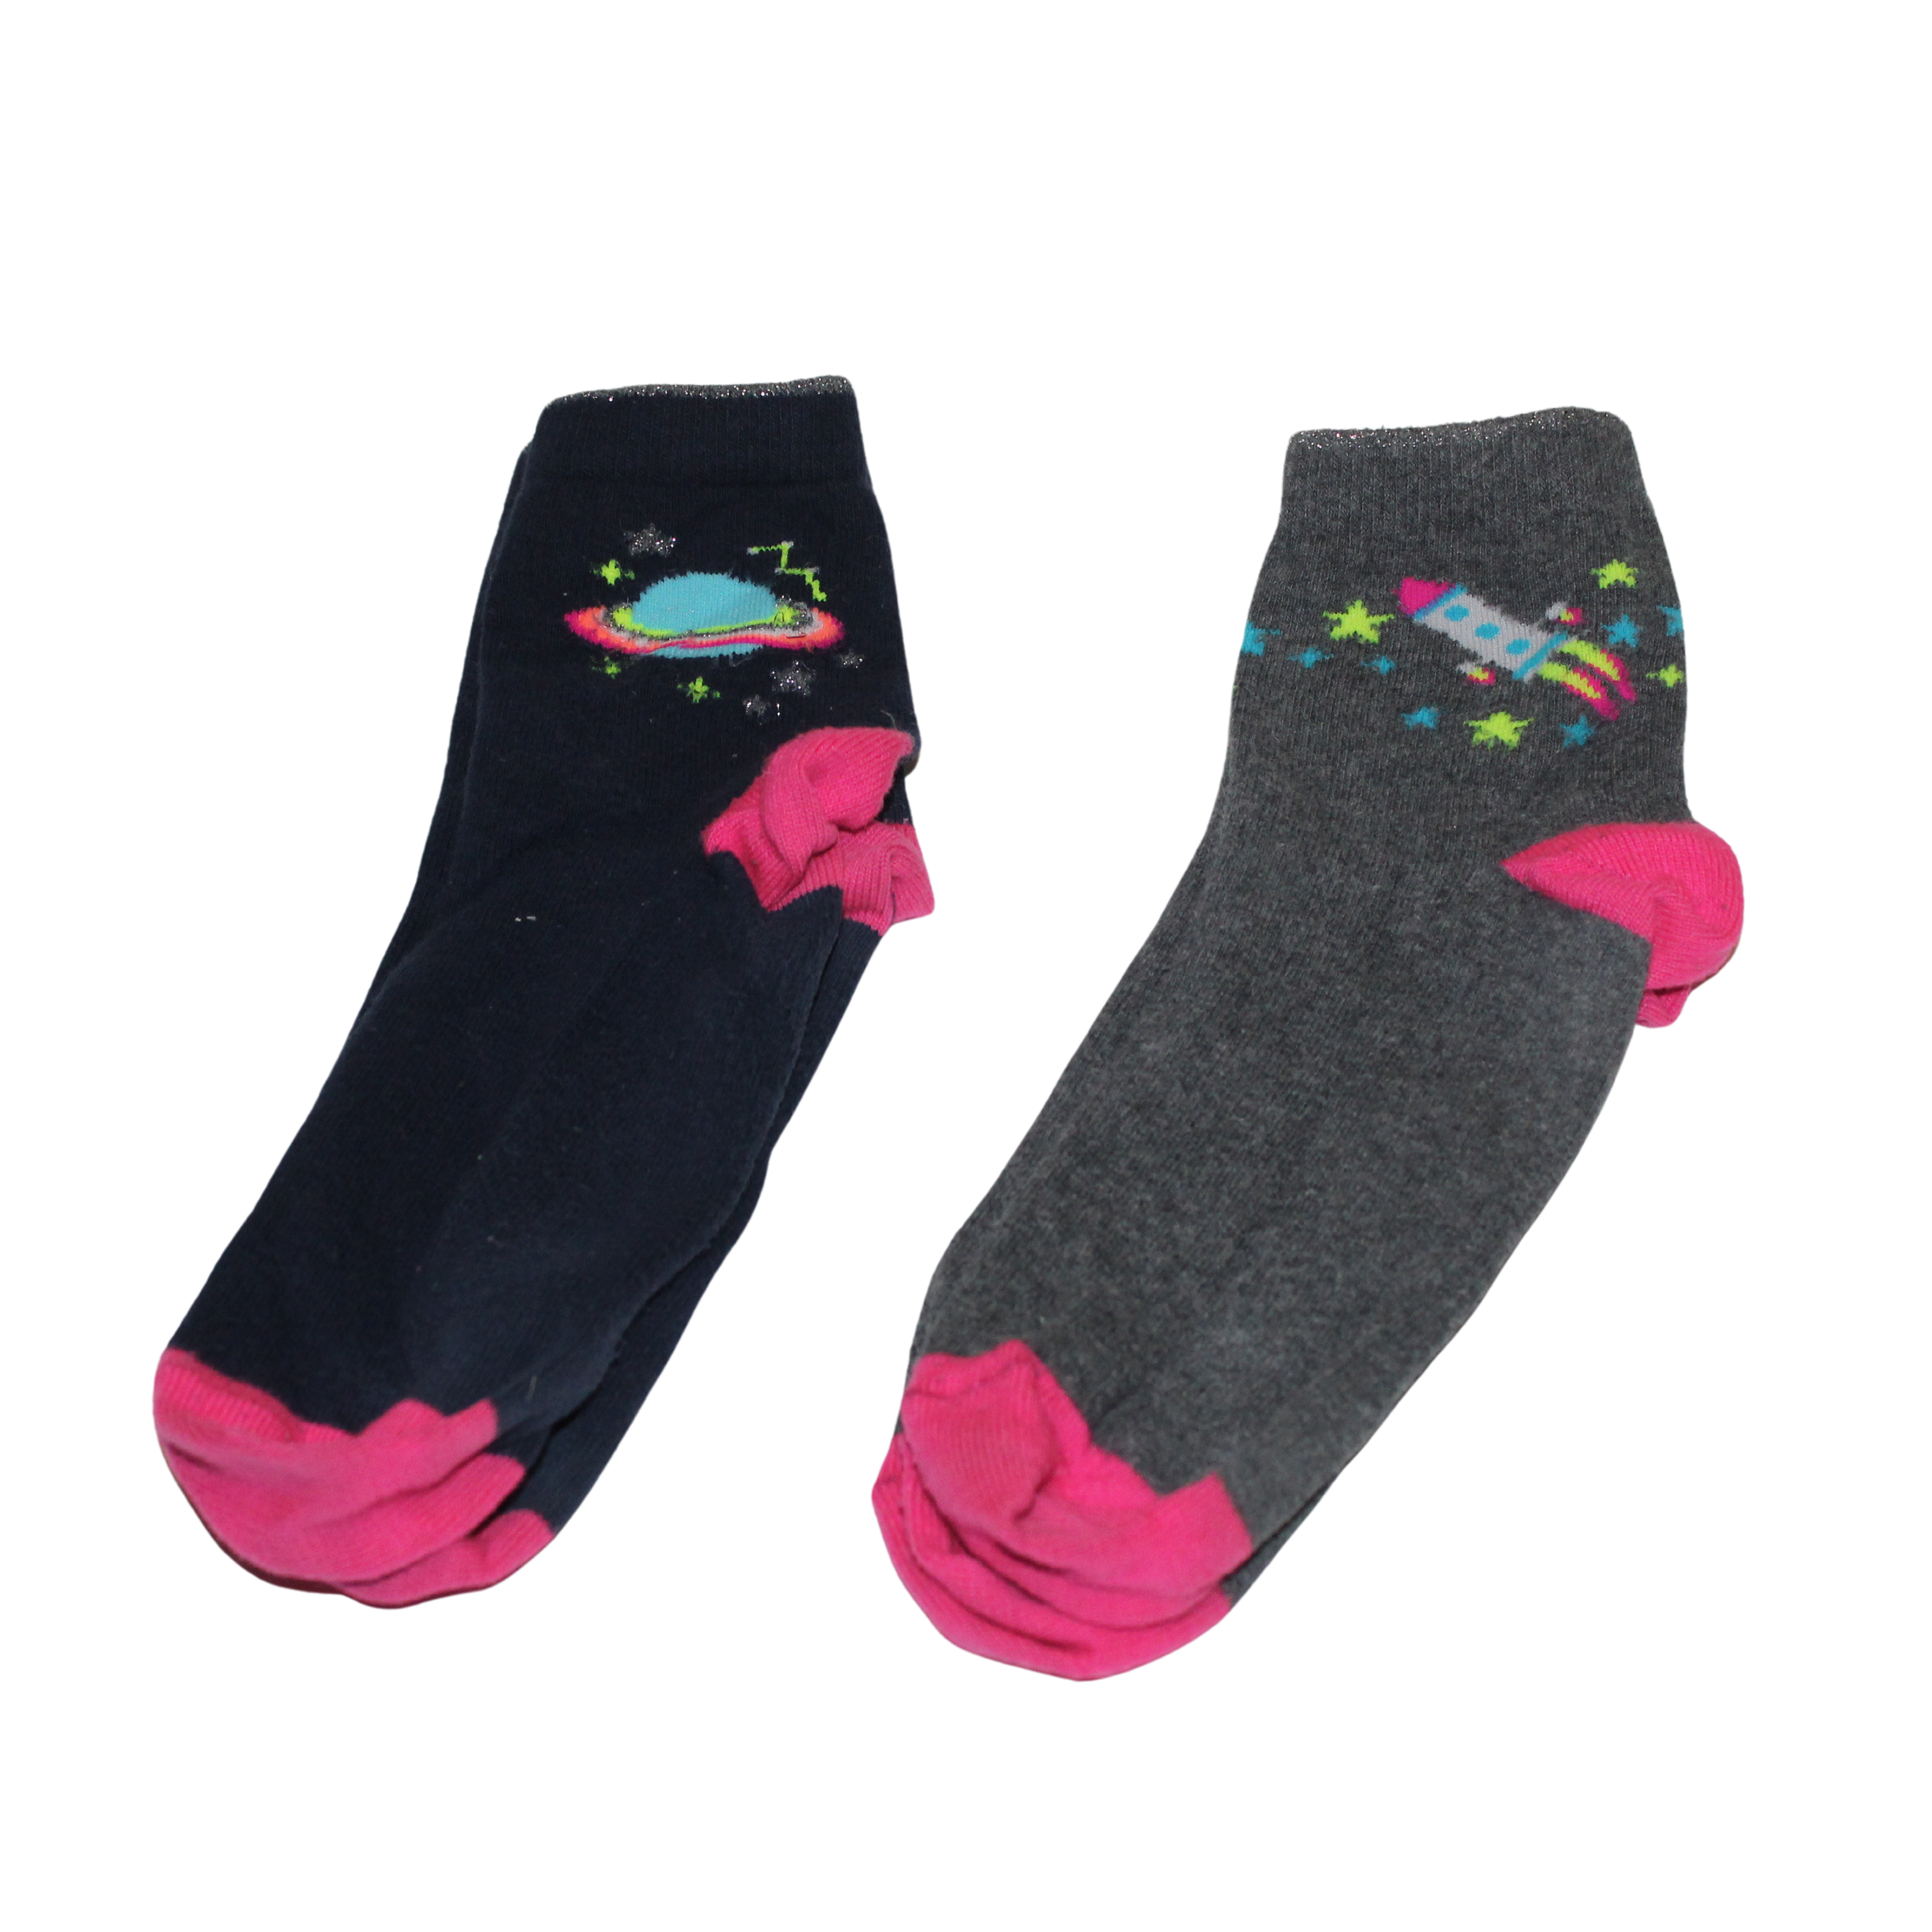 Space Socks x2